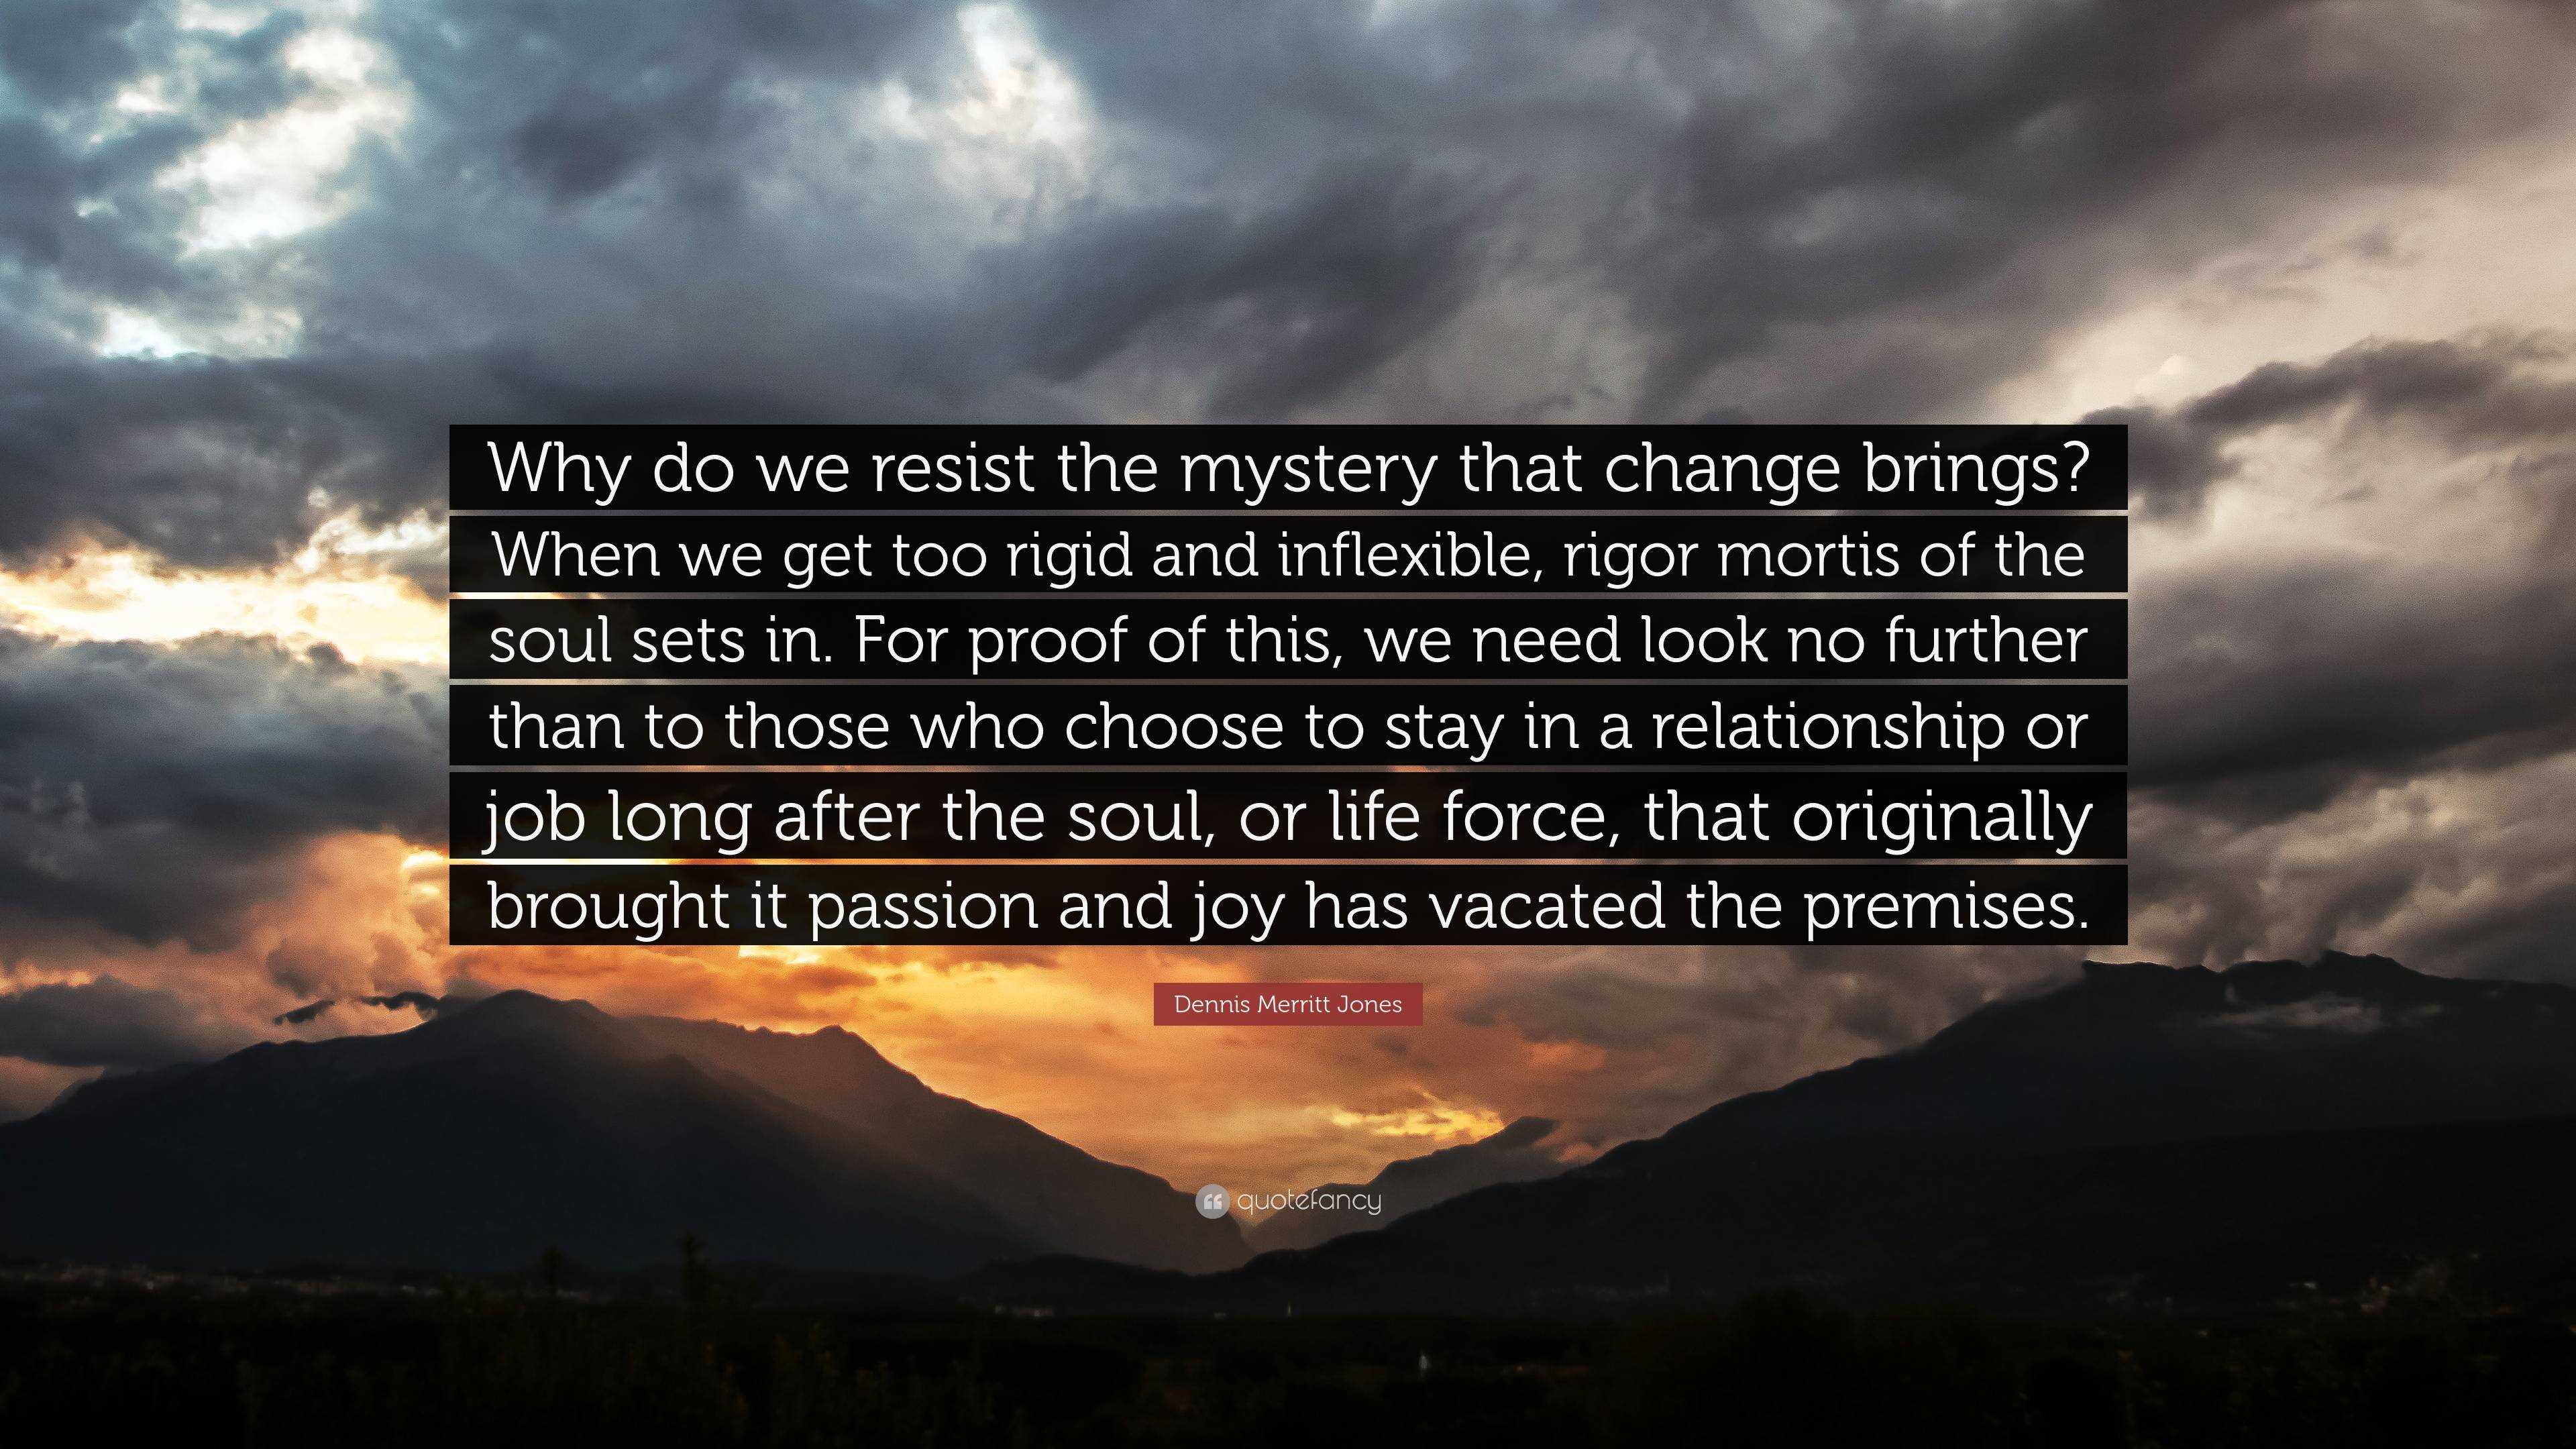 Dennis Merritt Jones Quote: “Why do we resist the mystery that change ...